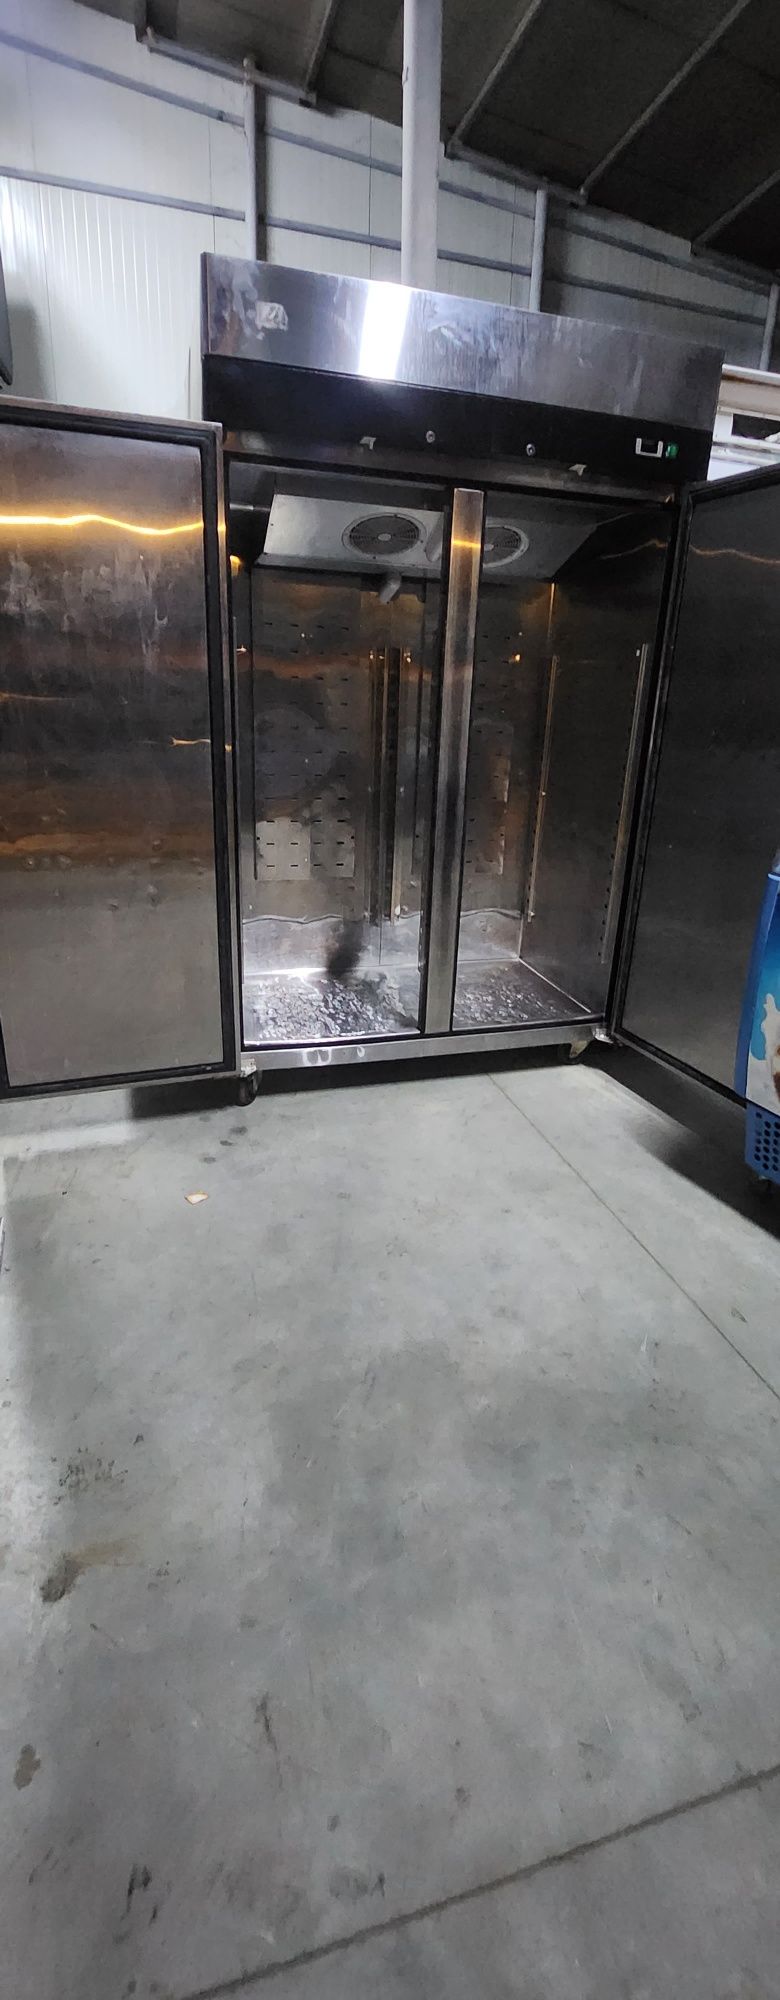 Congelator vertical inox profesional